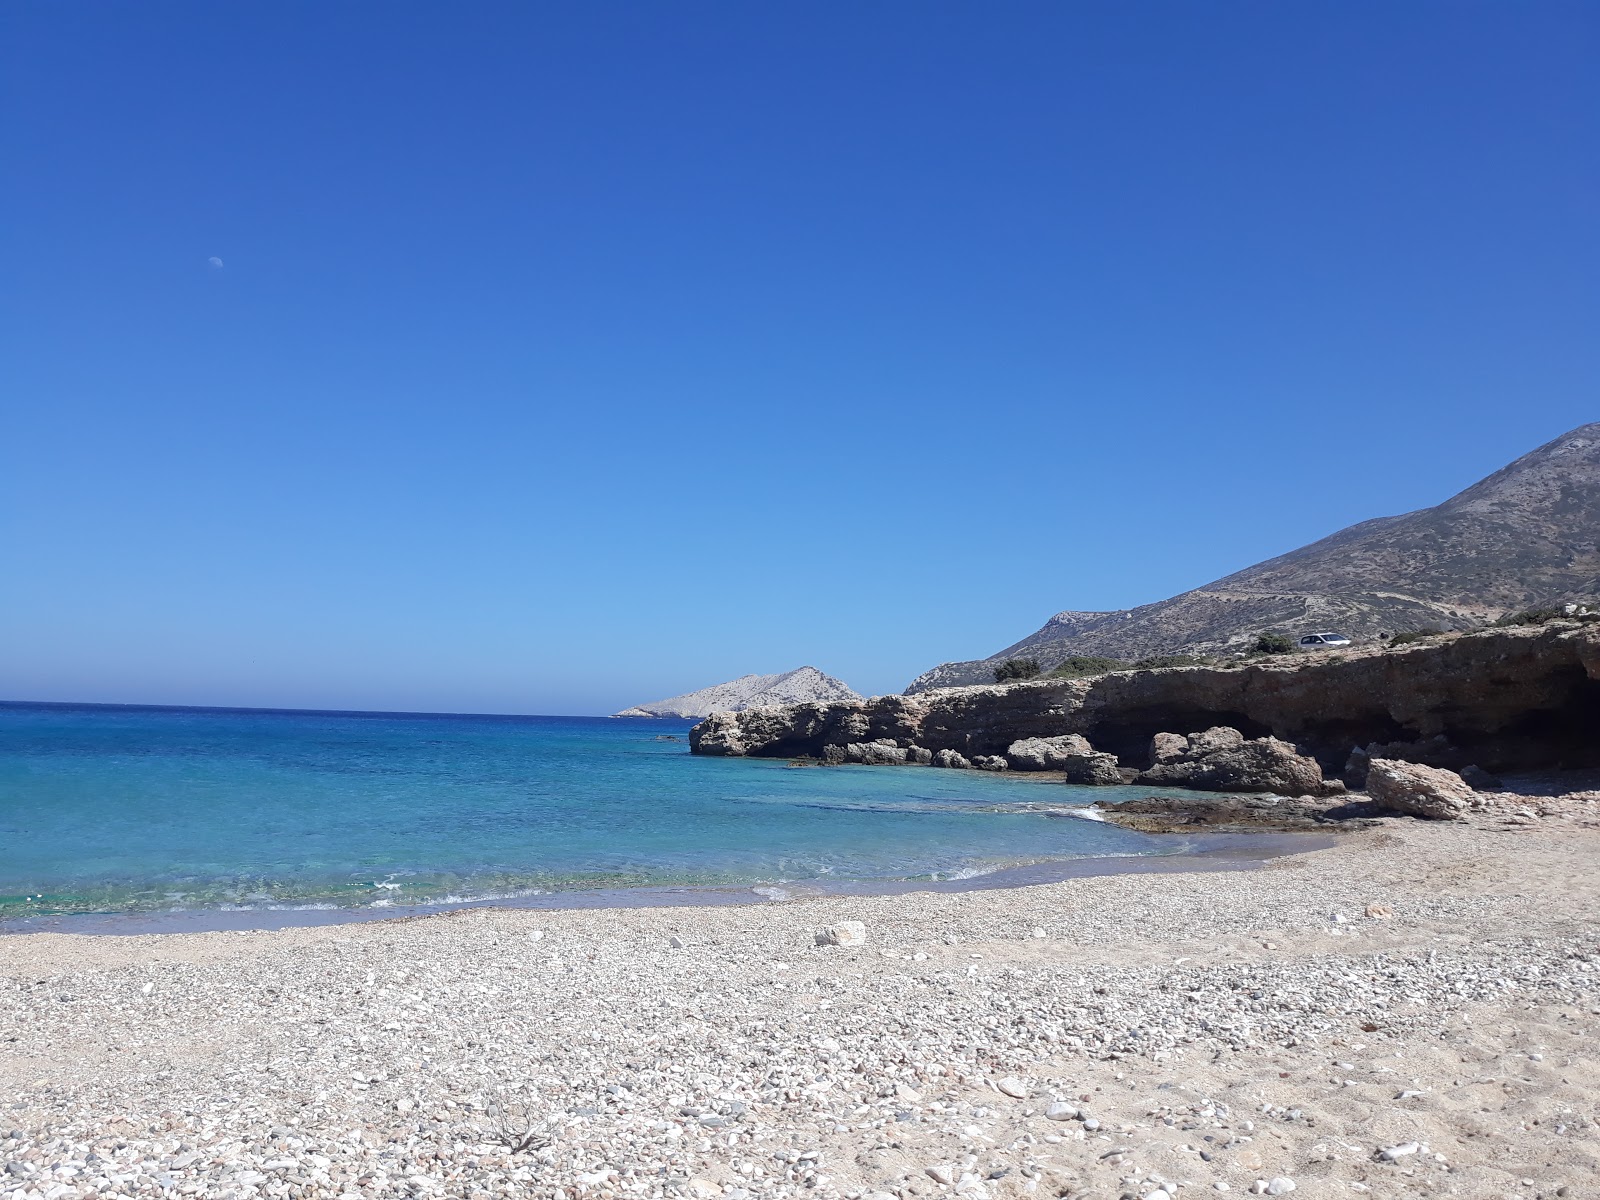 Fotografie cu Kalotaritissa beach cu nivelul de curățenie in medie